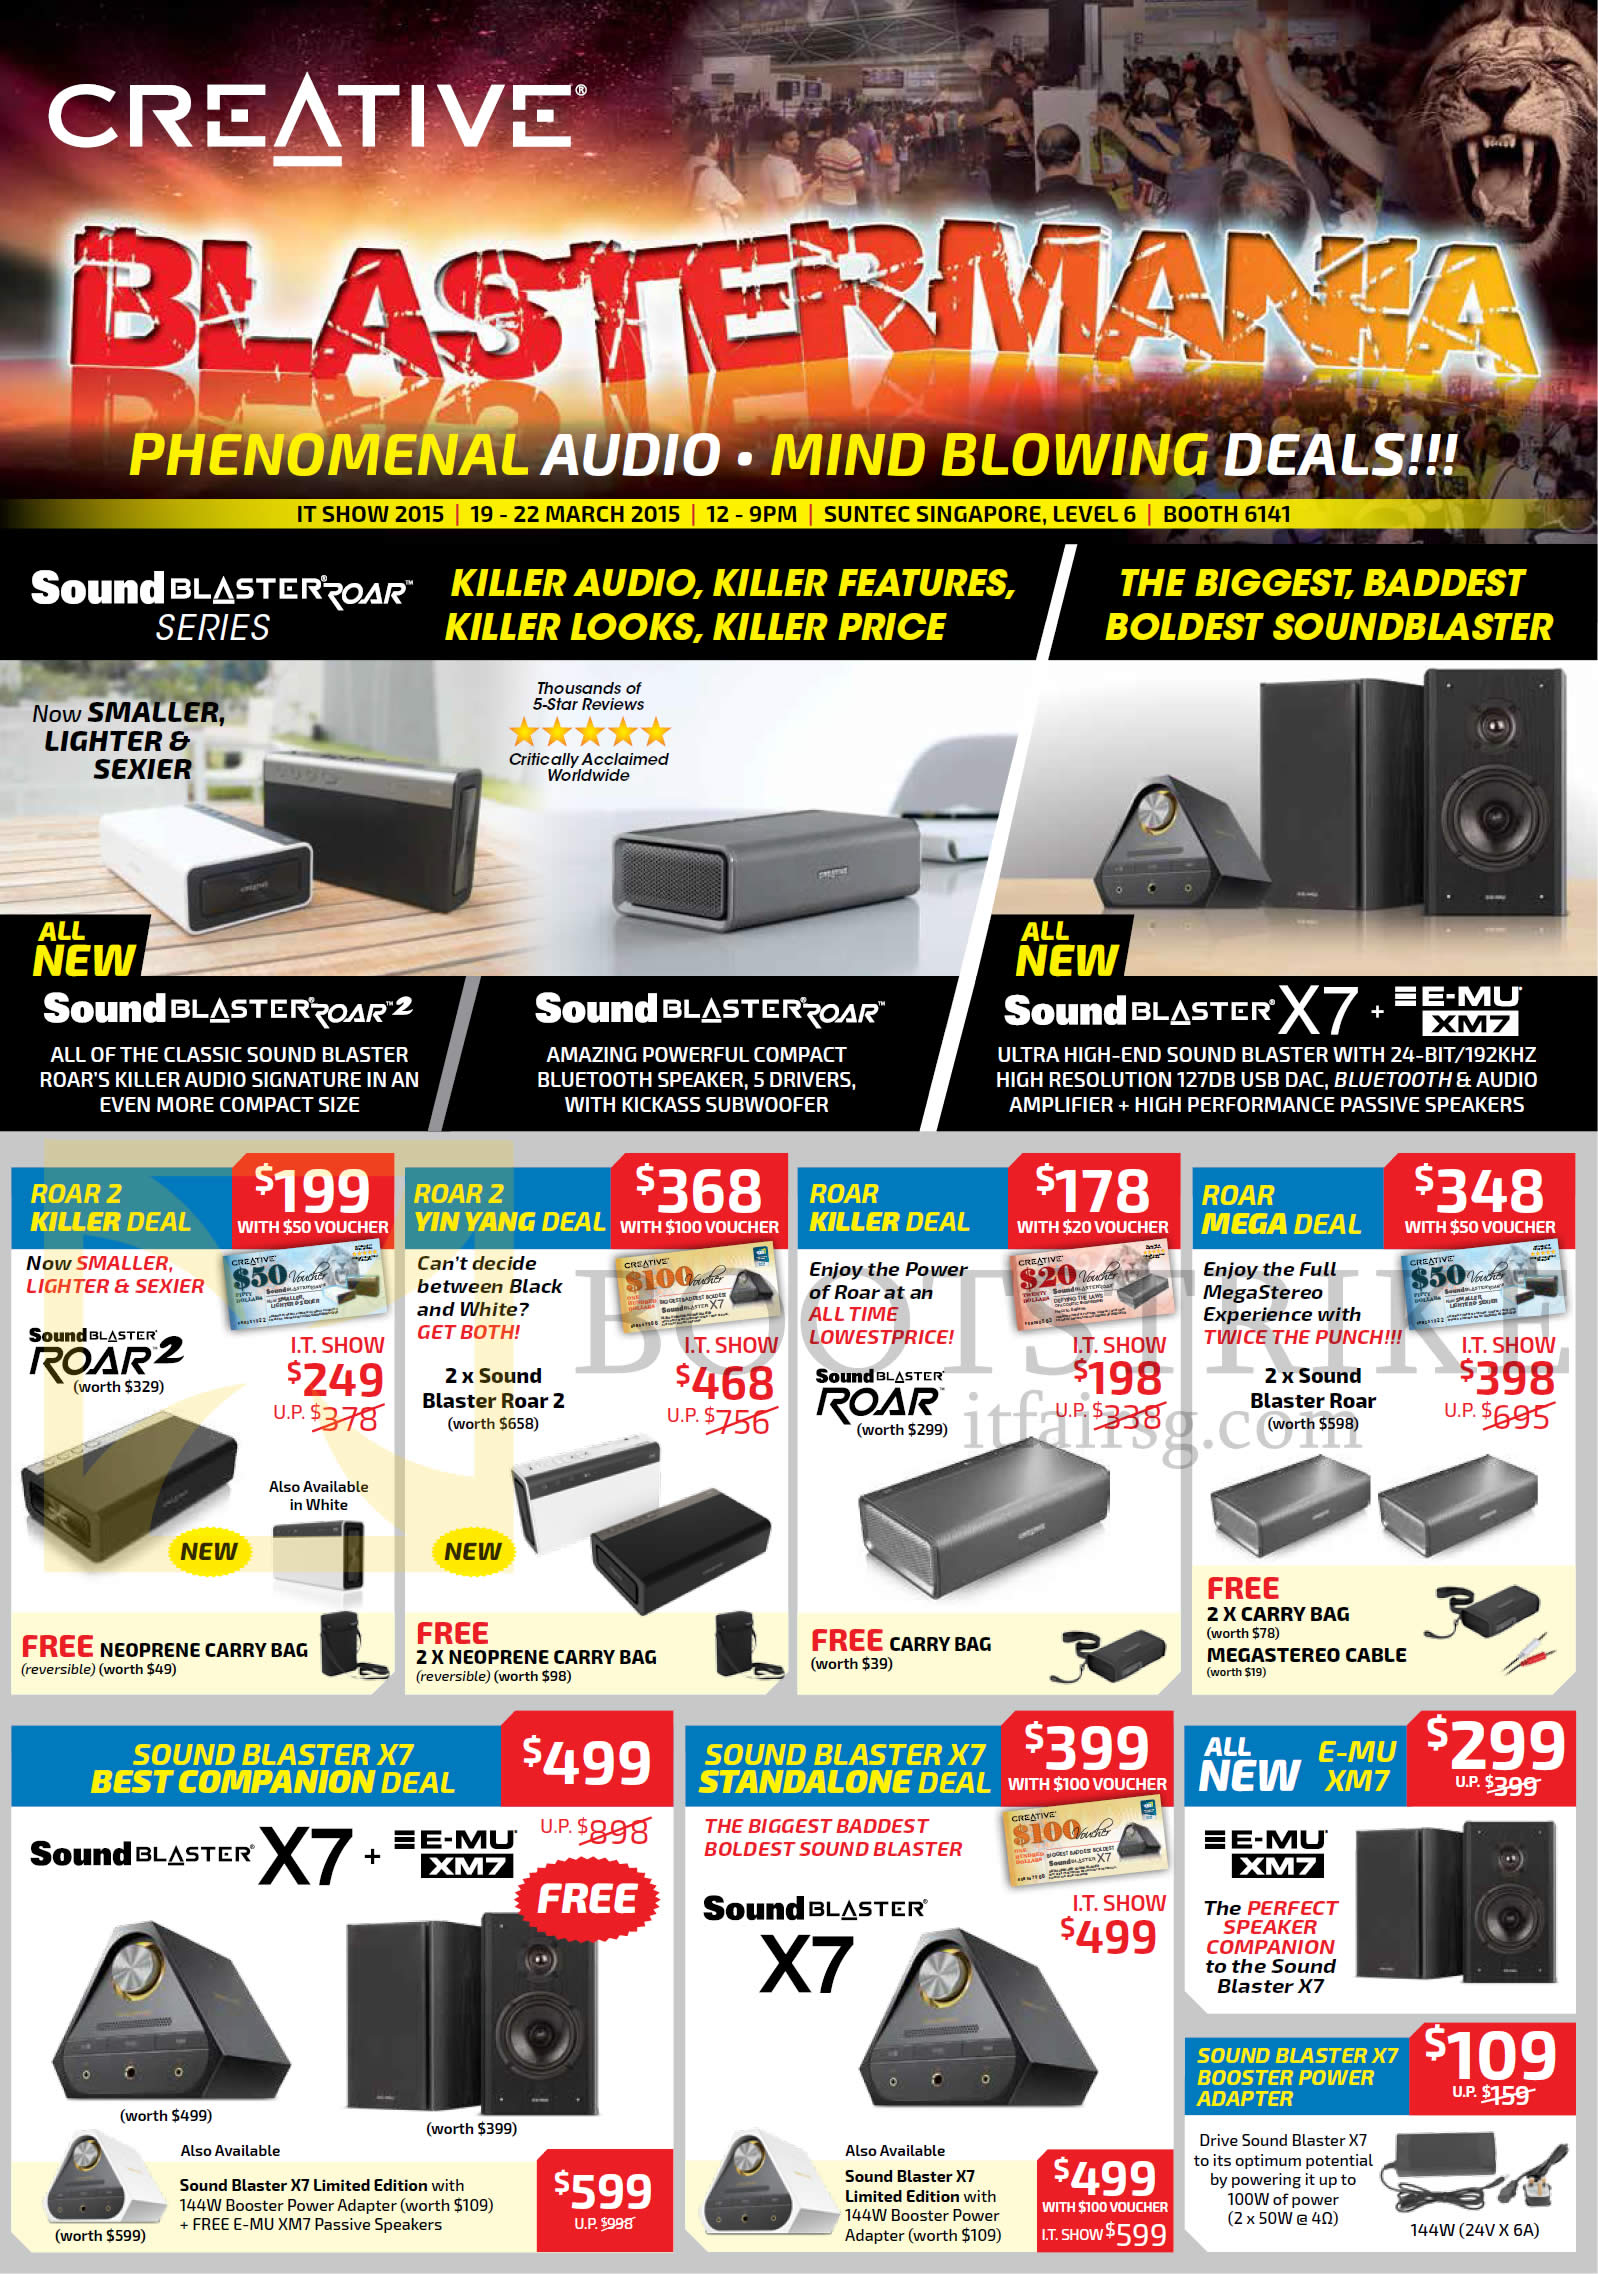 IT SHOW 2015 price list image brochure of Creative Roar 2, Sound Blaster X7, E-MU XM7